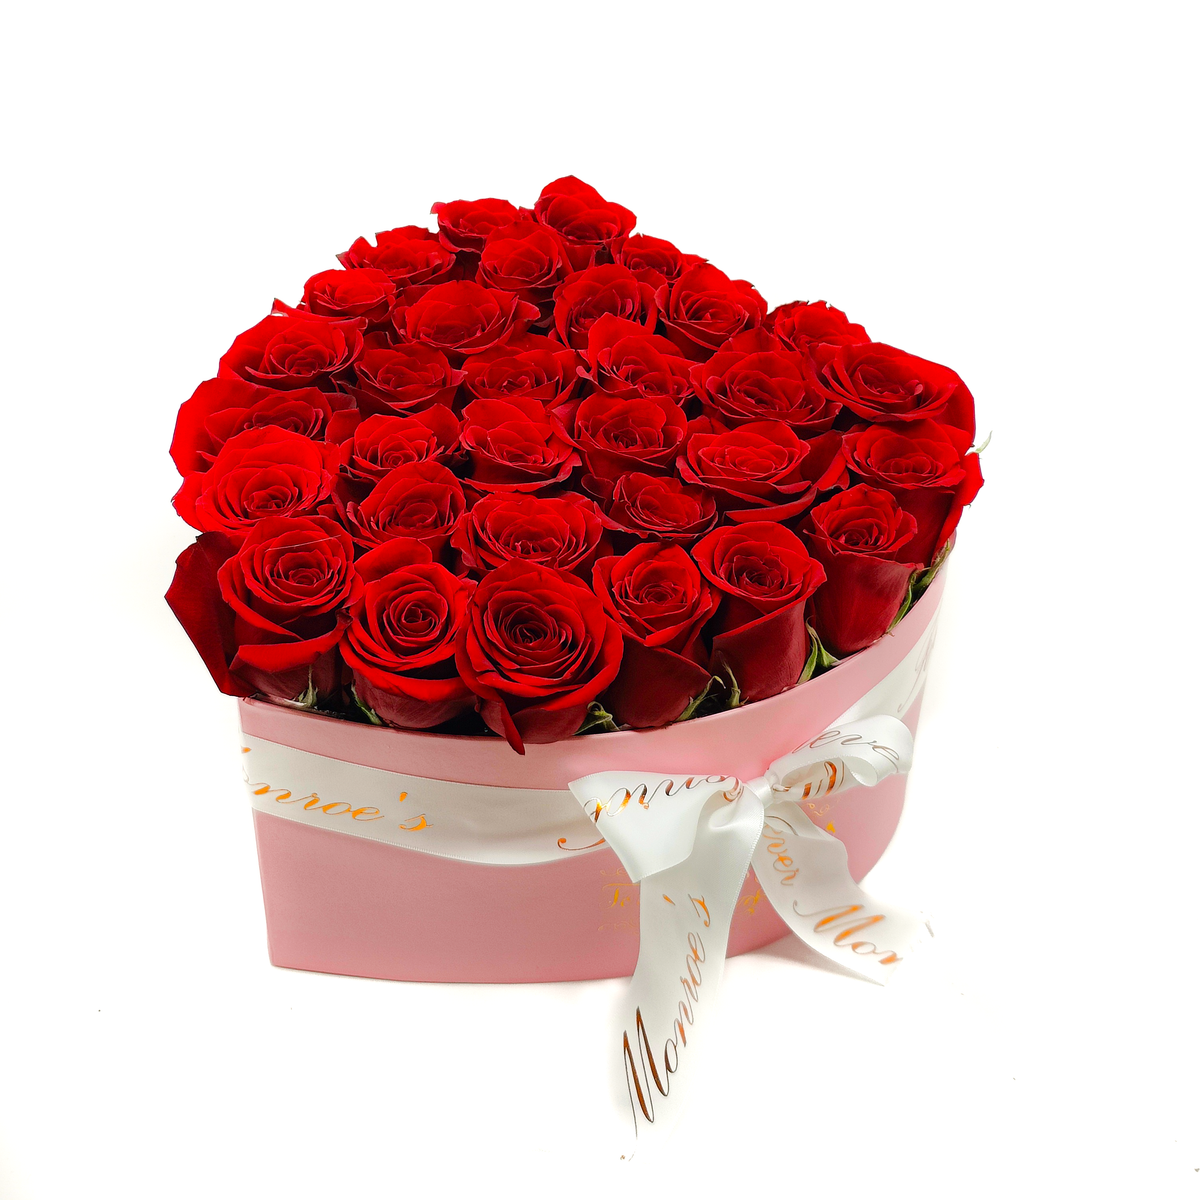 Heart Box Rose Bouquet - Large (Pink Box)